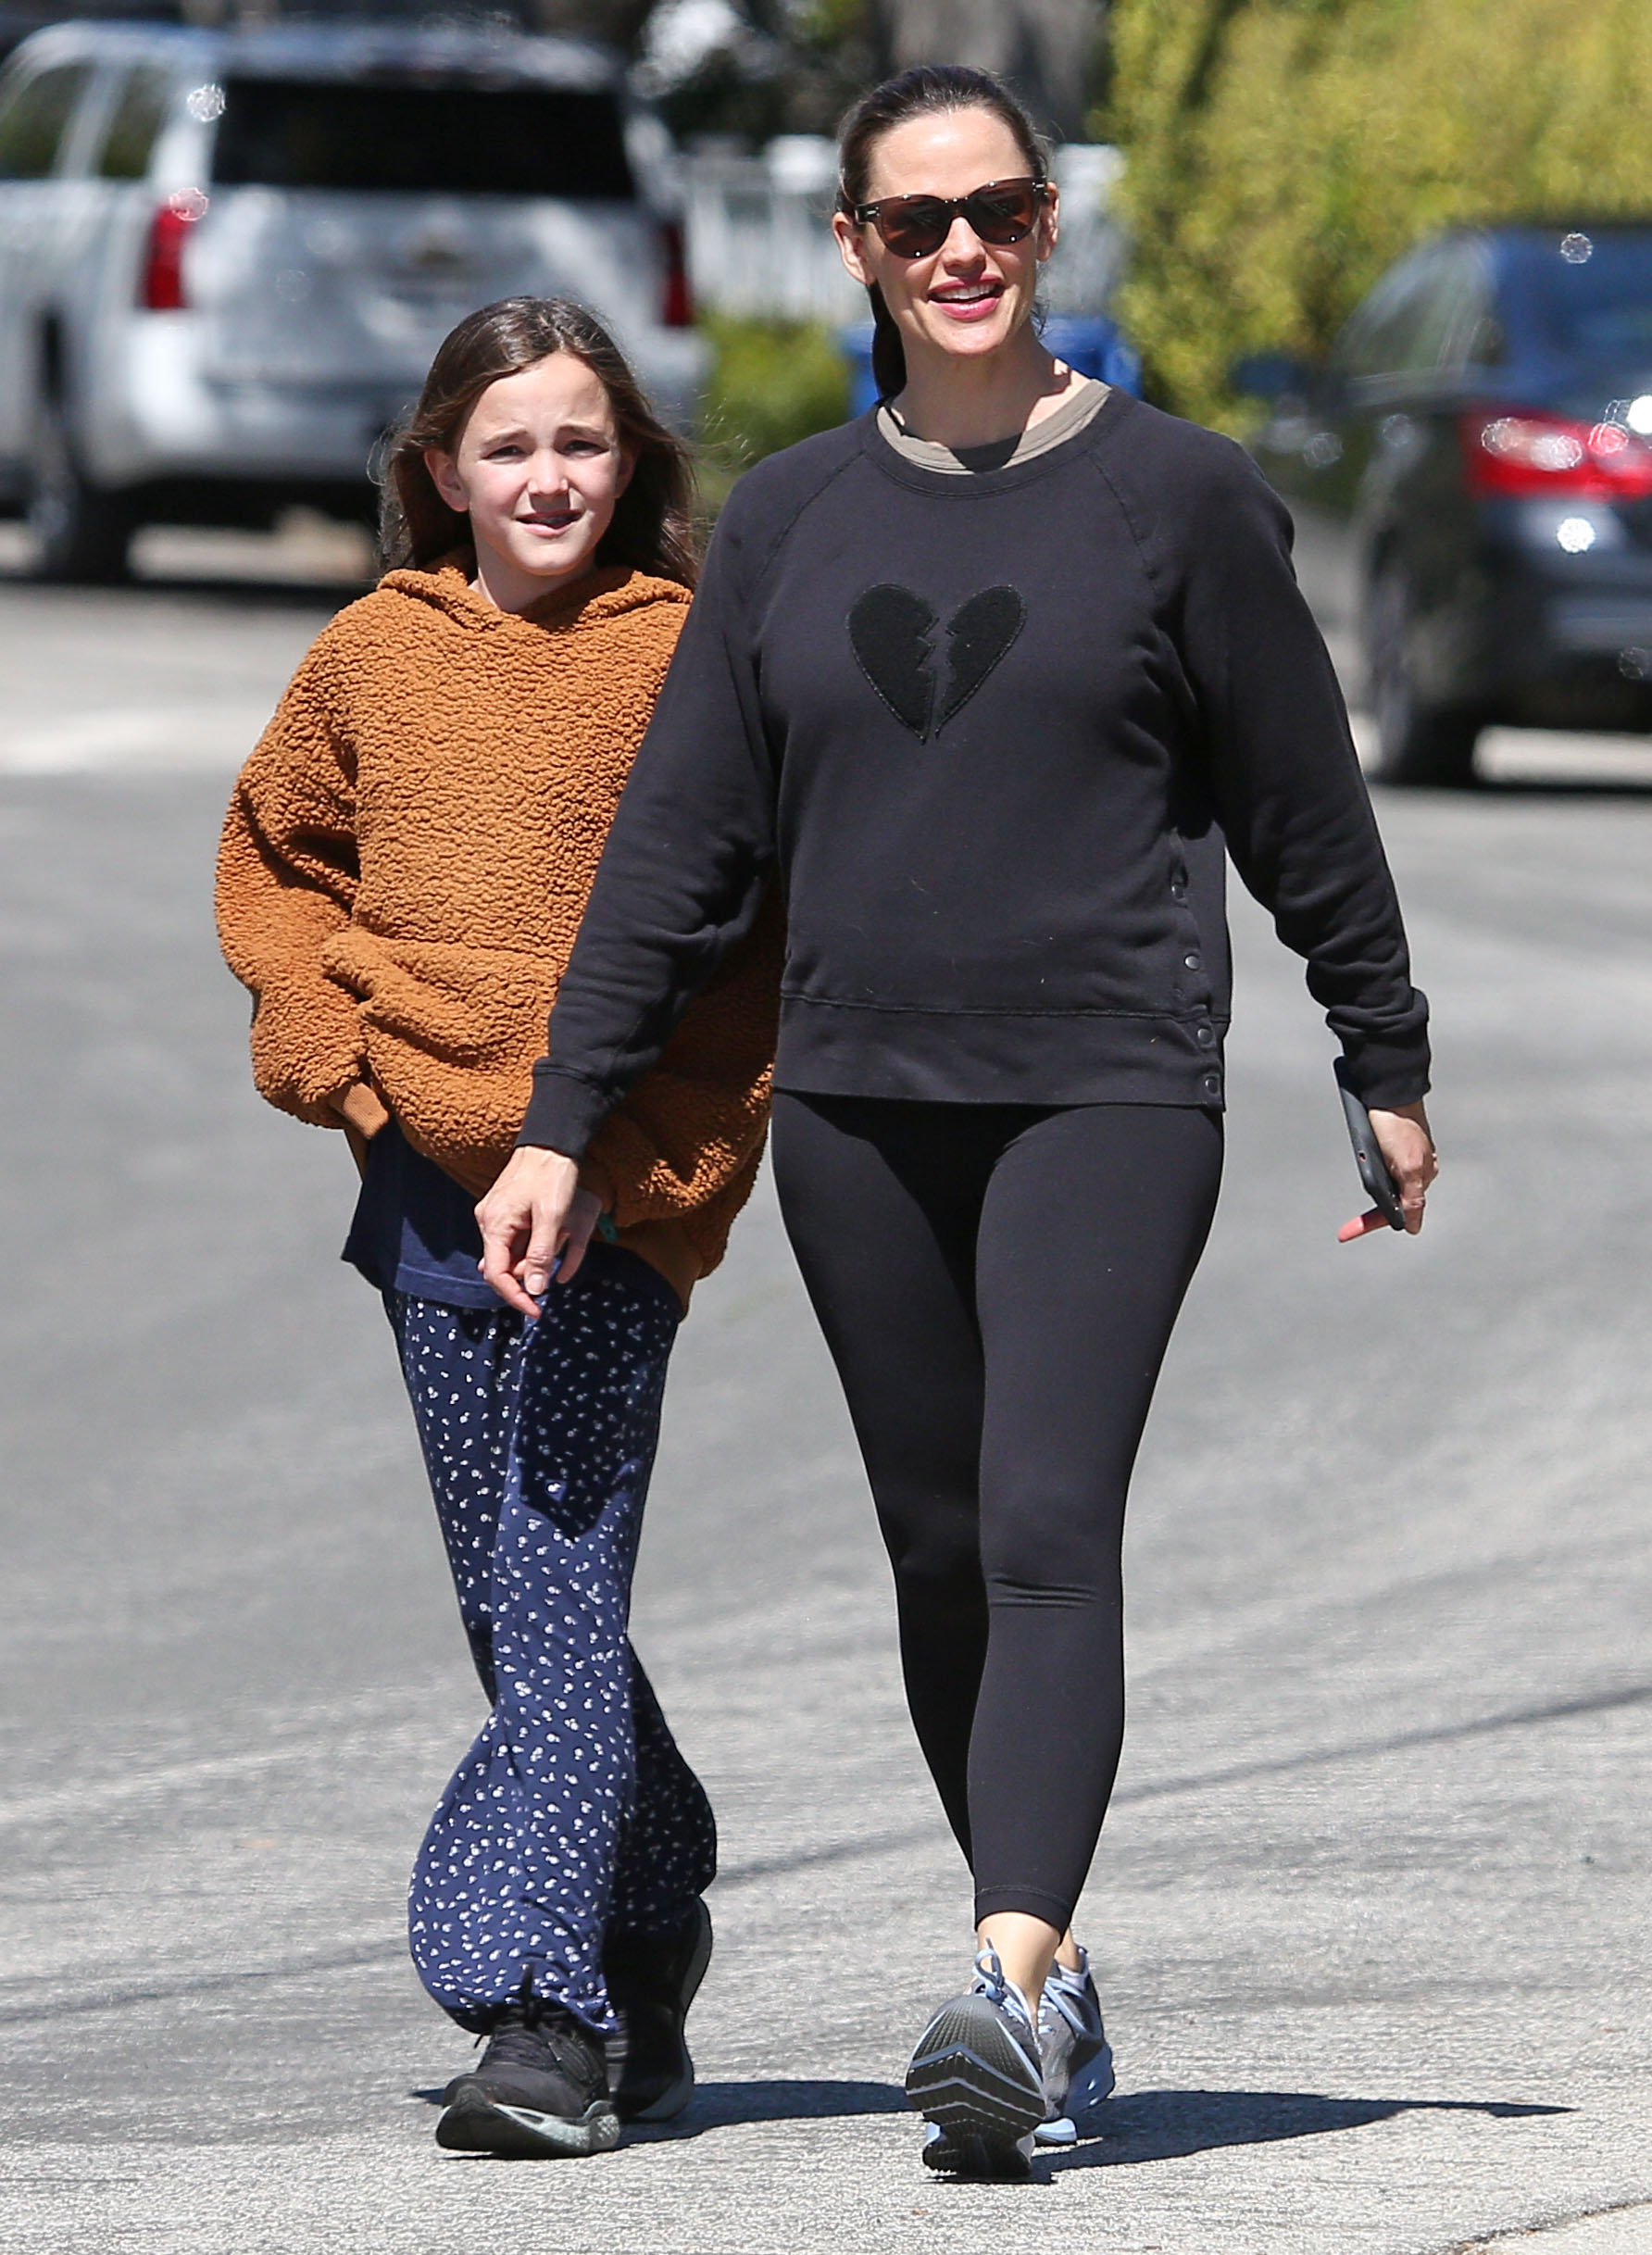 Jennifer Garner and Daughter Seraphina Go on a Walk Amid Coronavirus